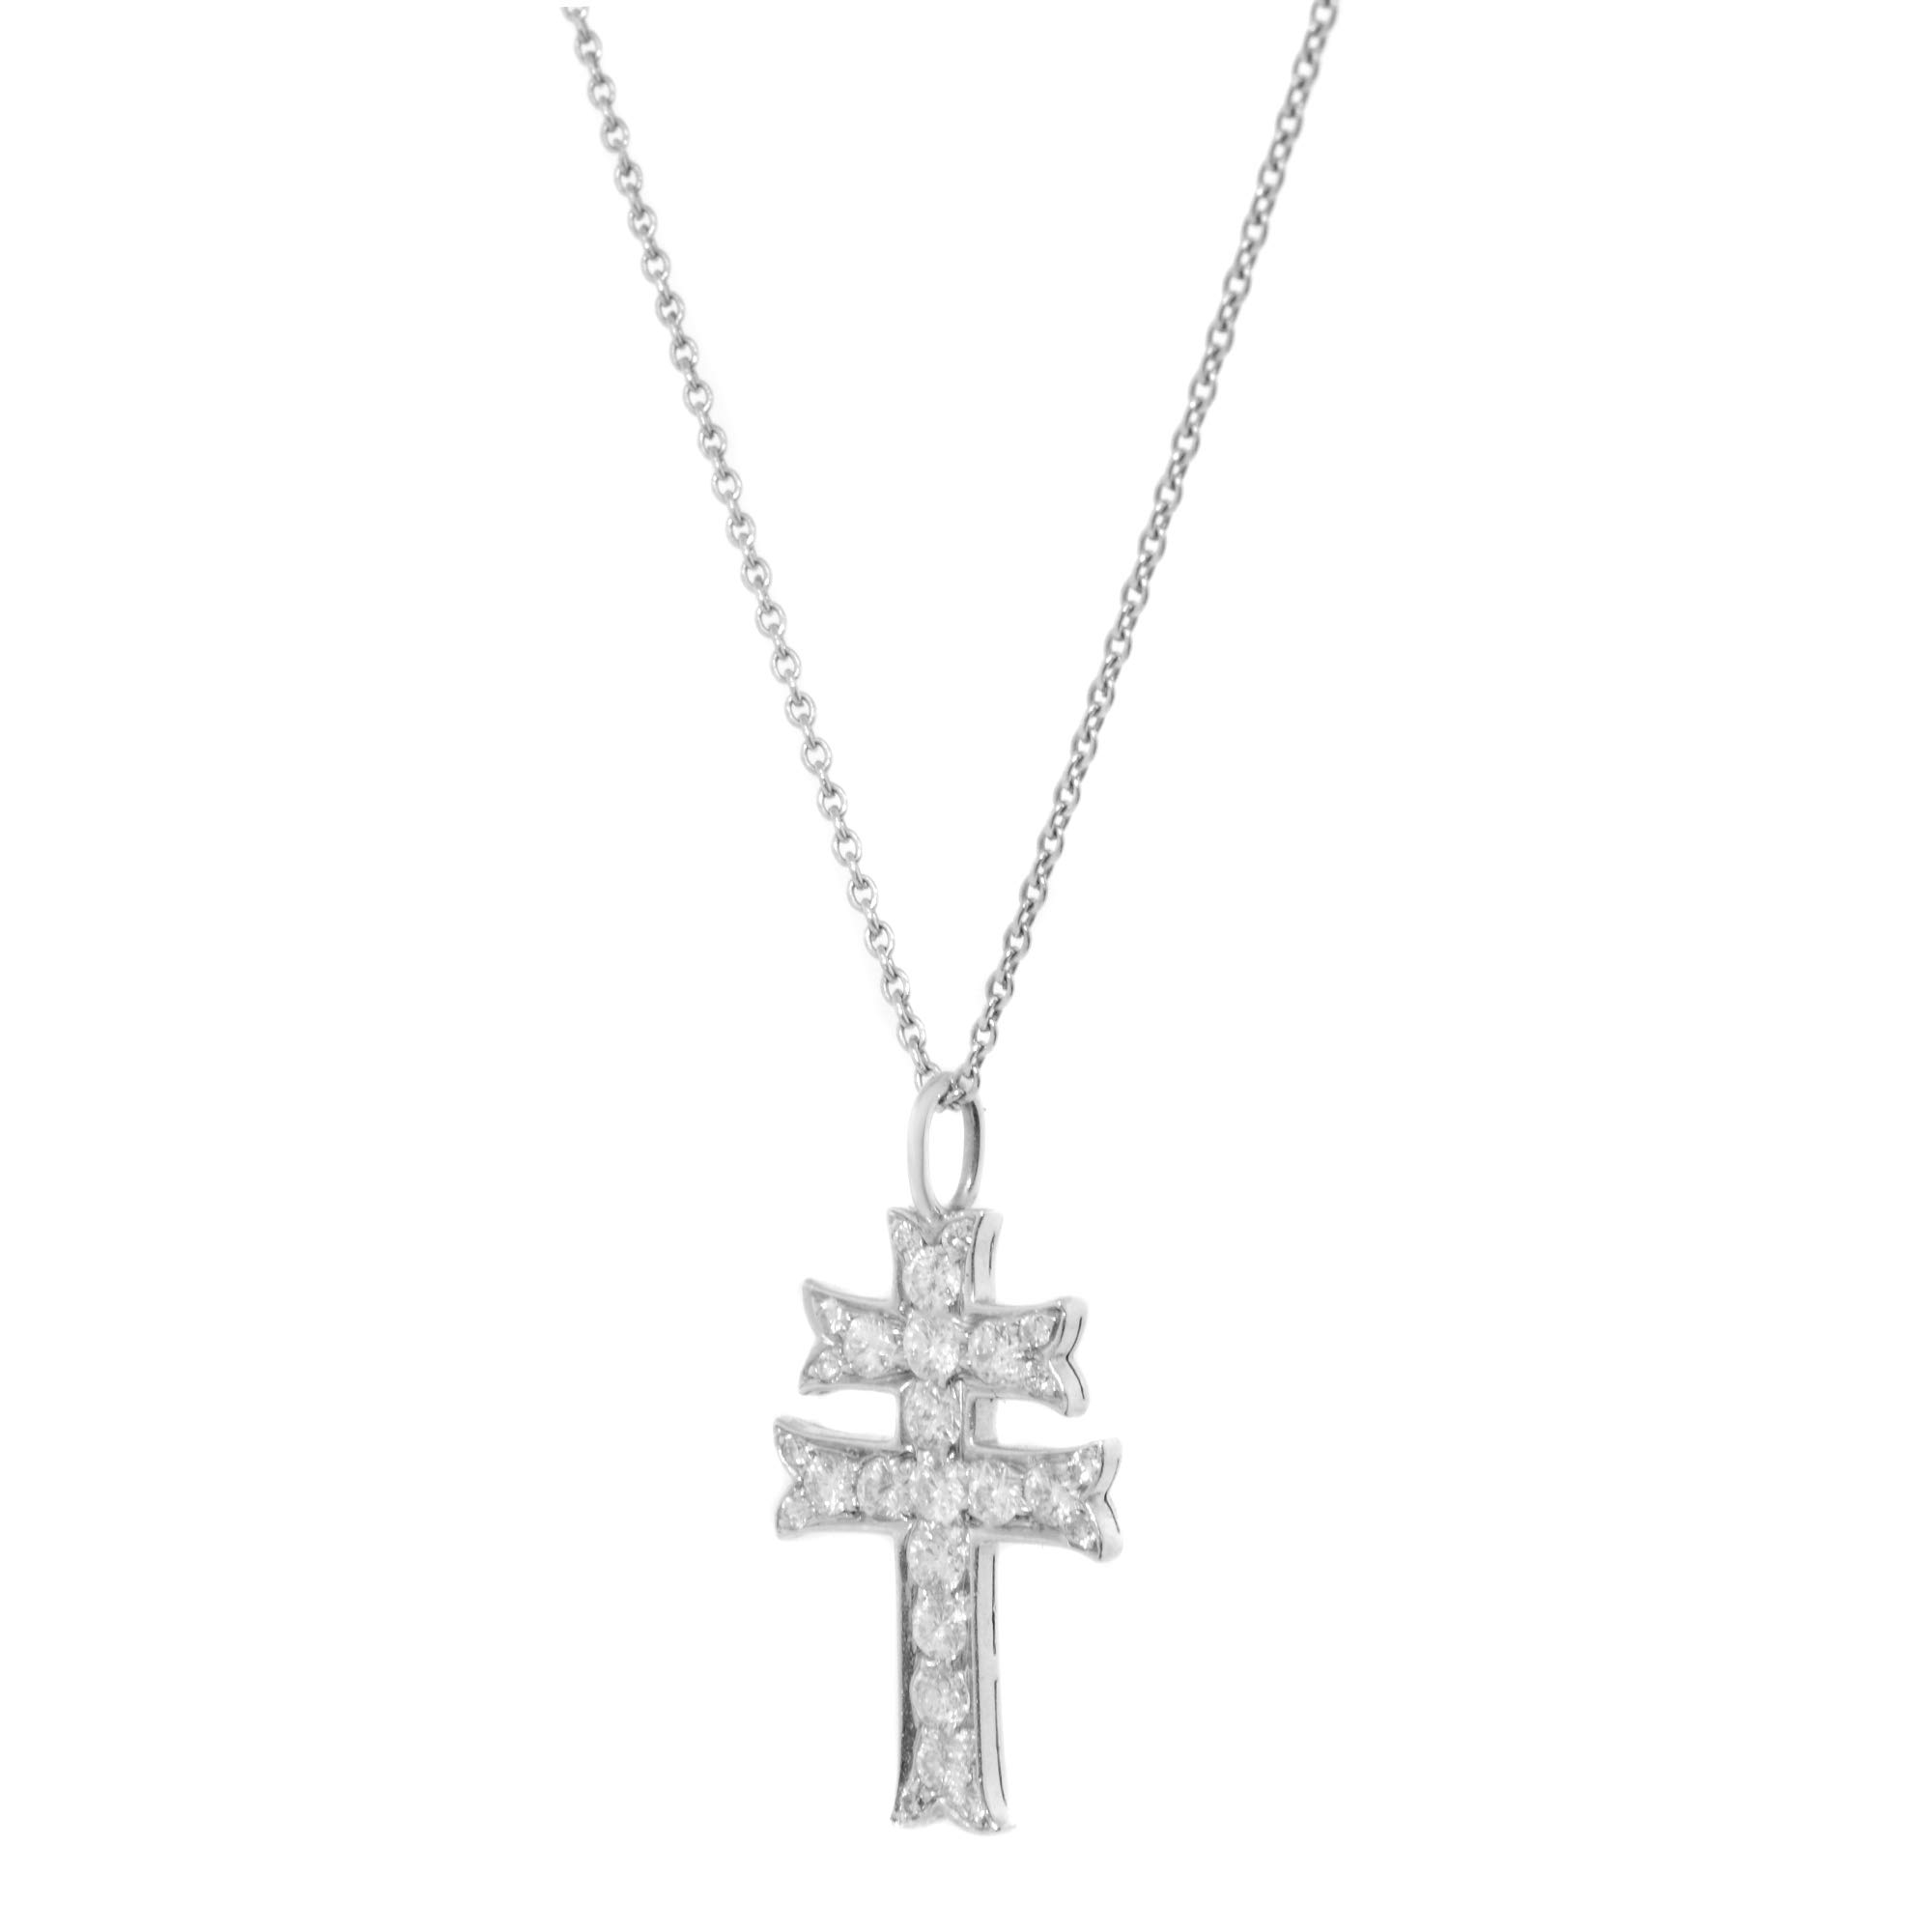 Rachel Koen Platinum Necklace with 0.33cttw Diamond Cross Pendant